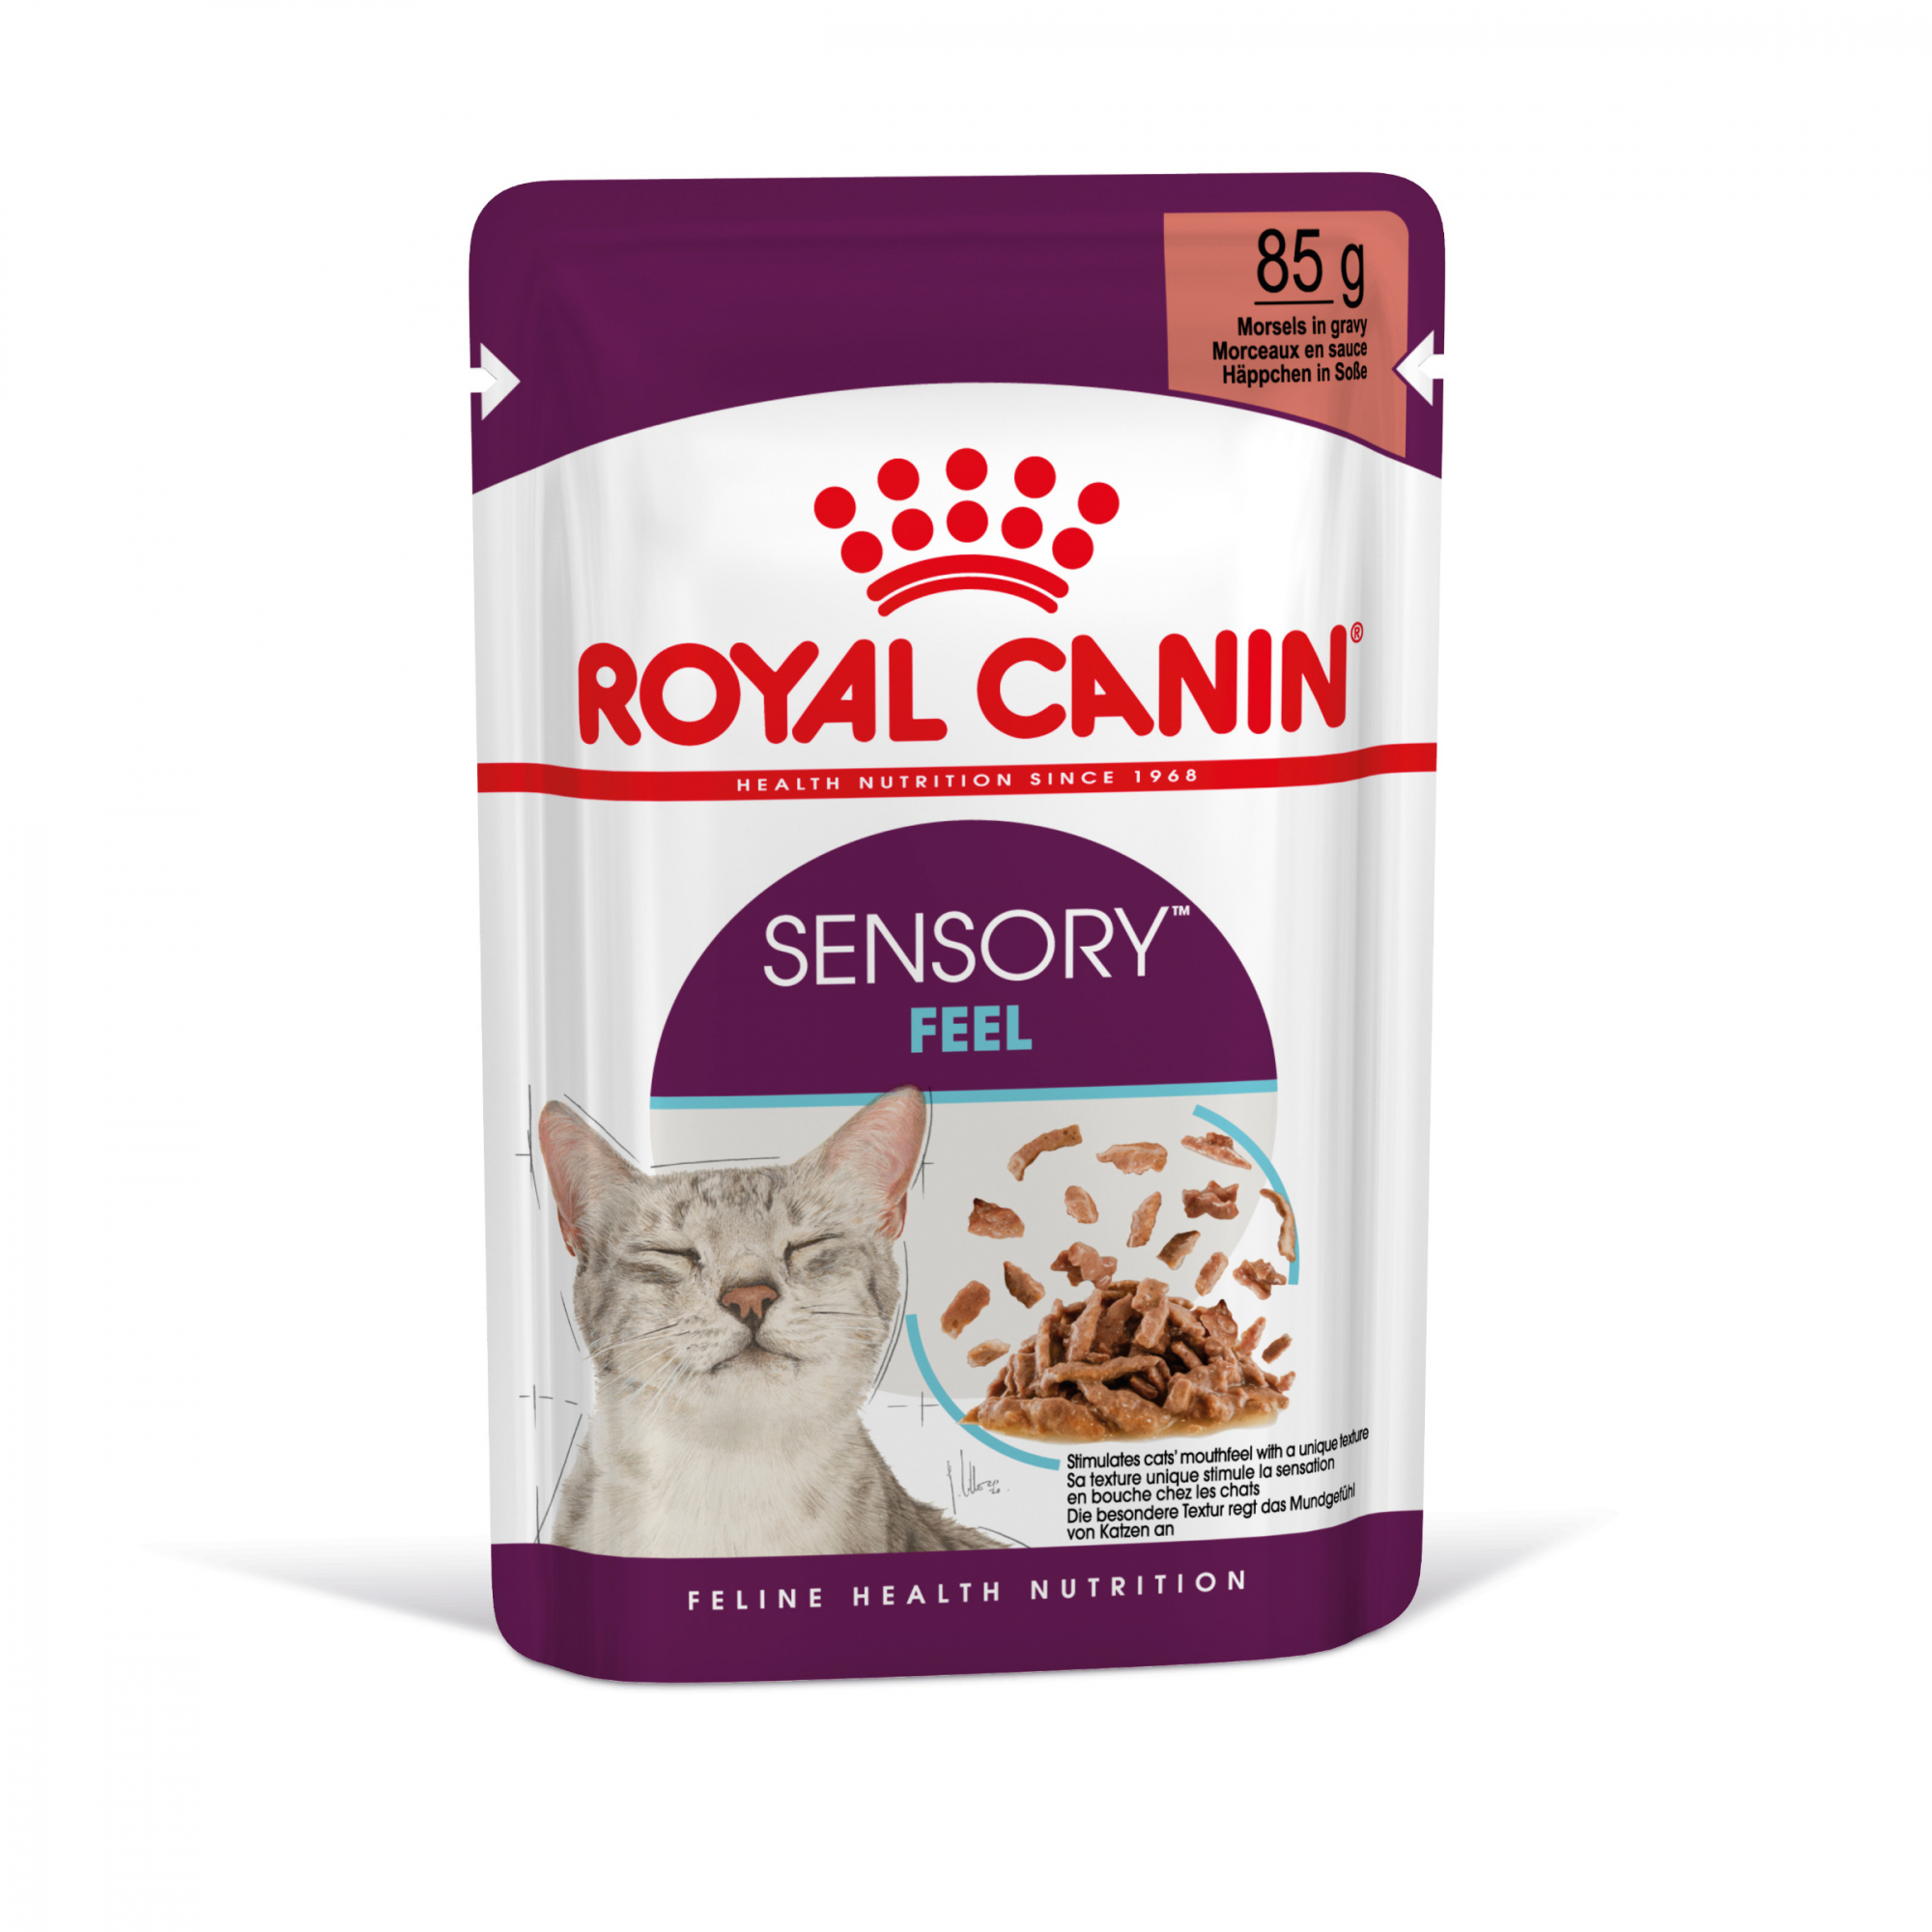 Royal Canin Sensory Feel patê em molho para gato